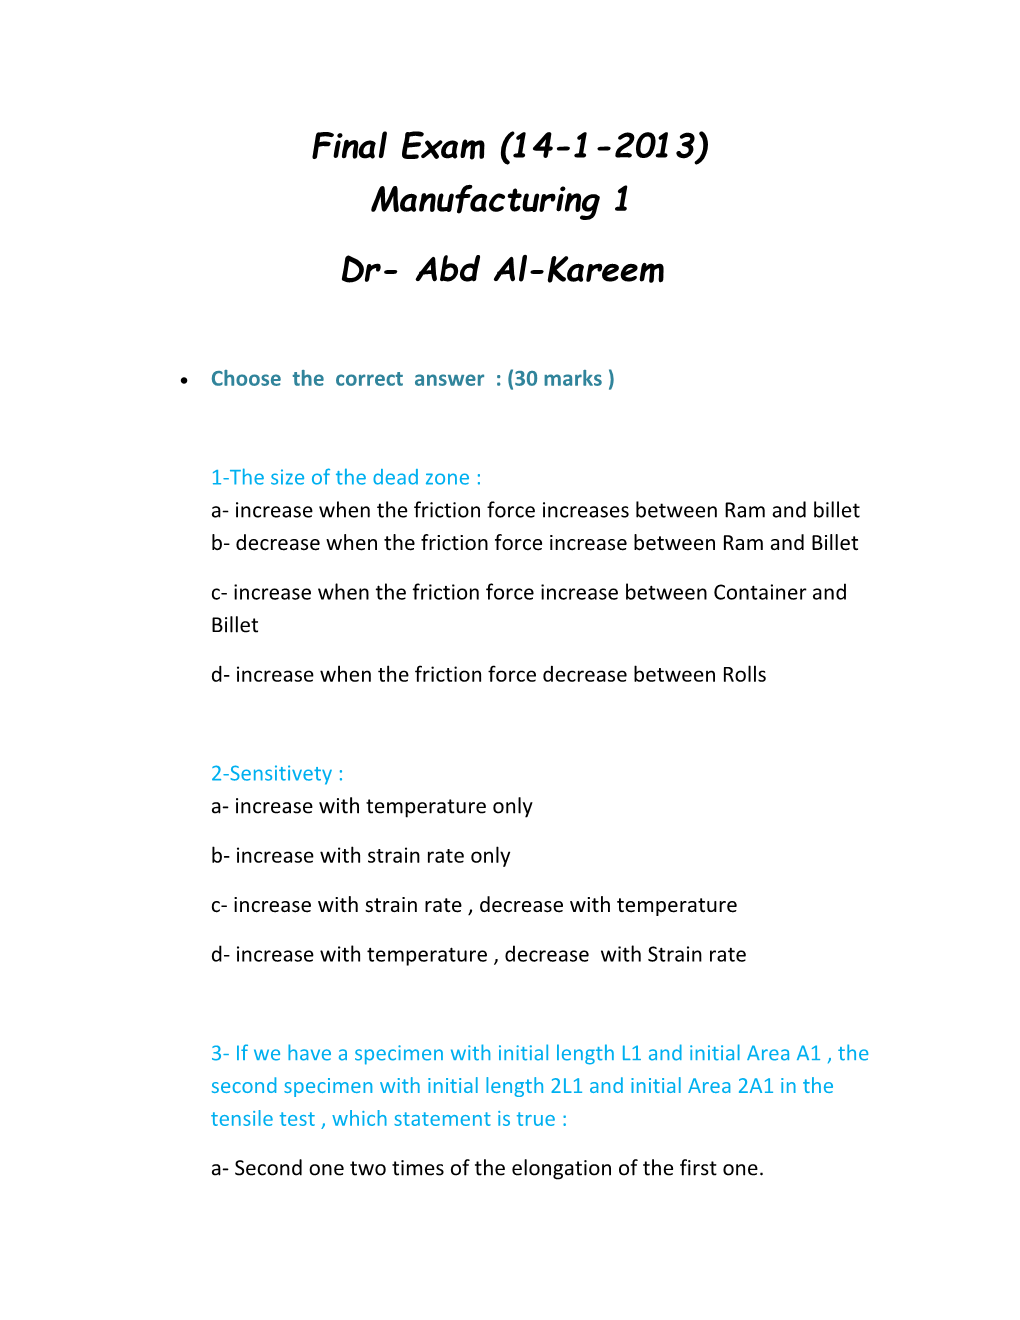 Final Exam(14-1-2013) Manufacturing 1